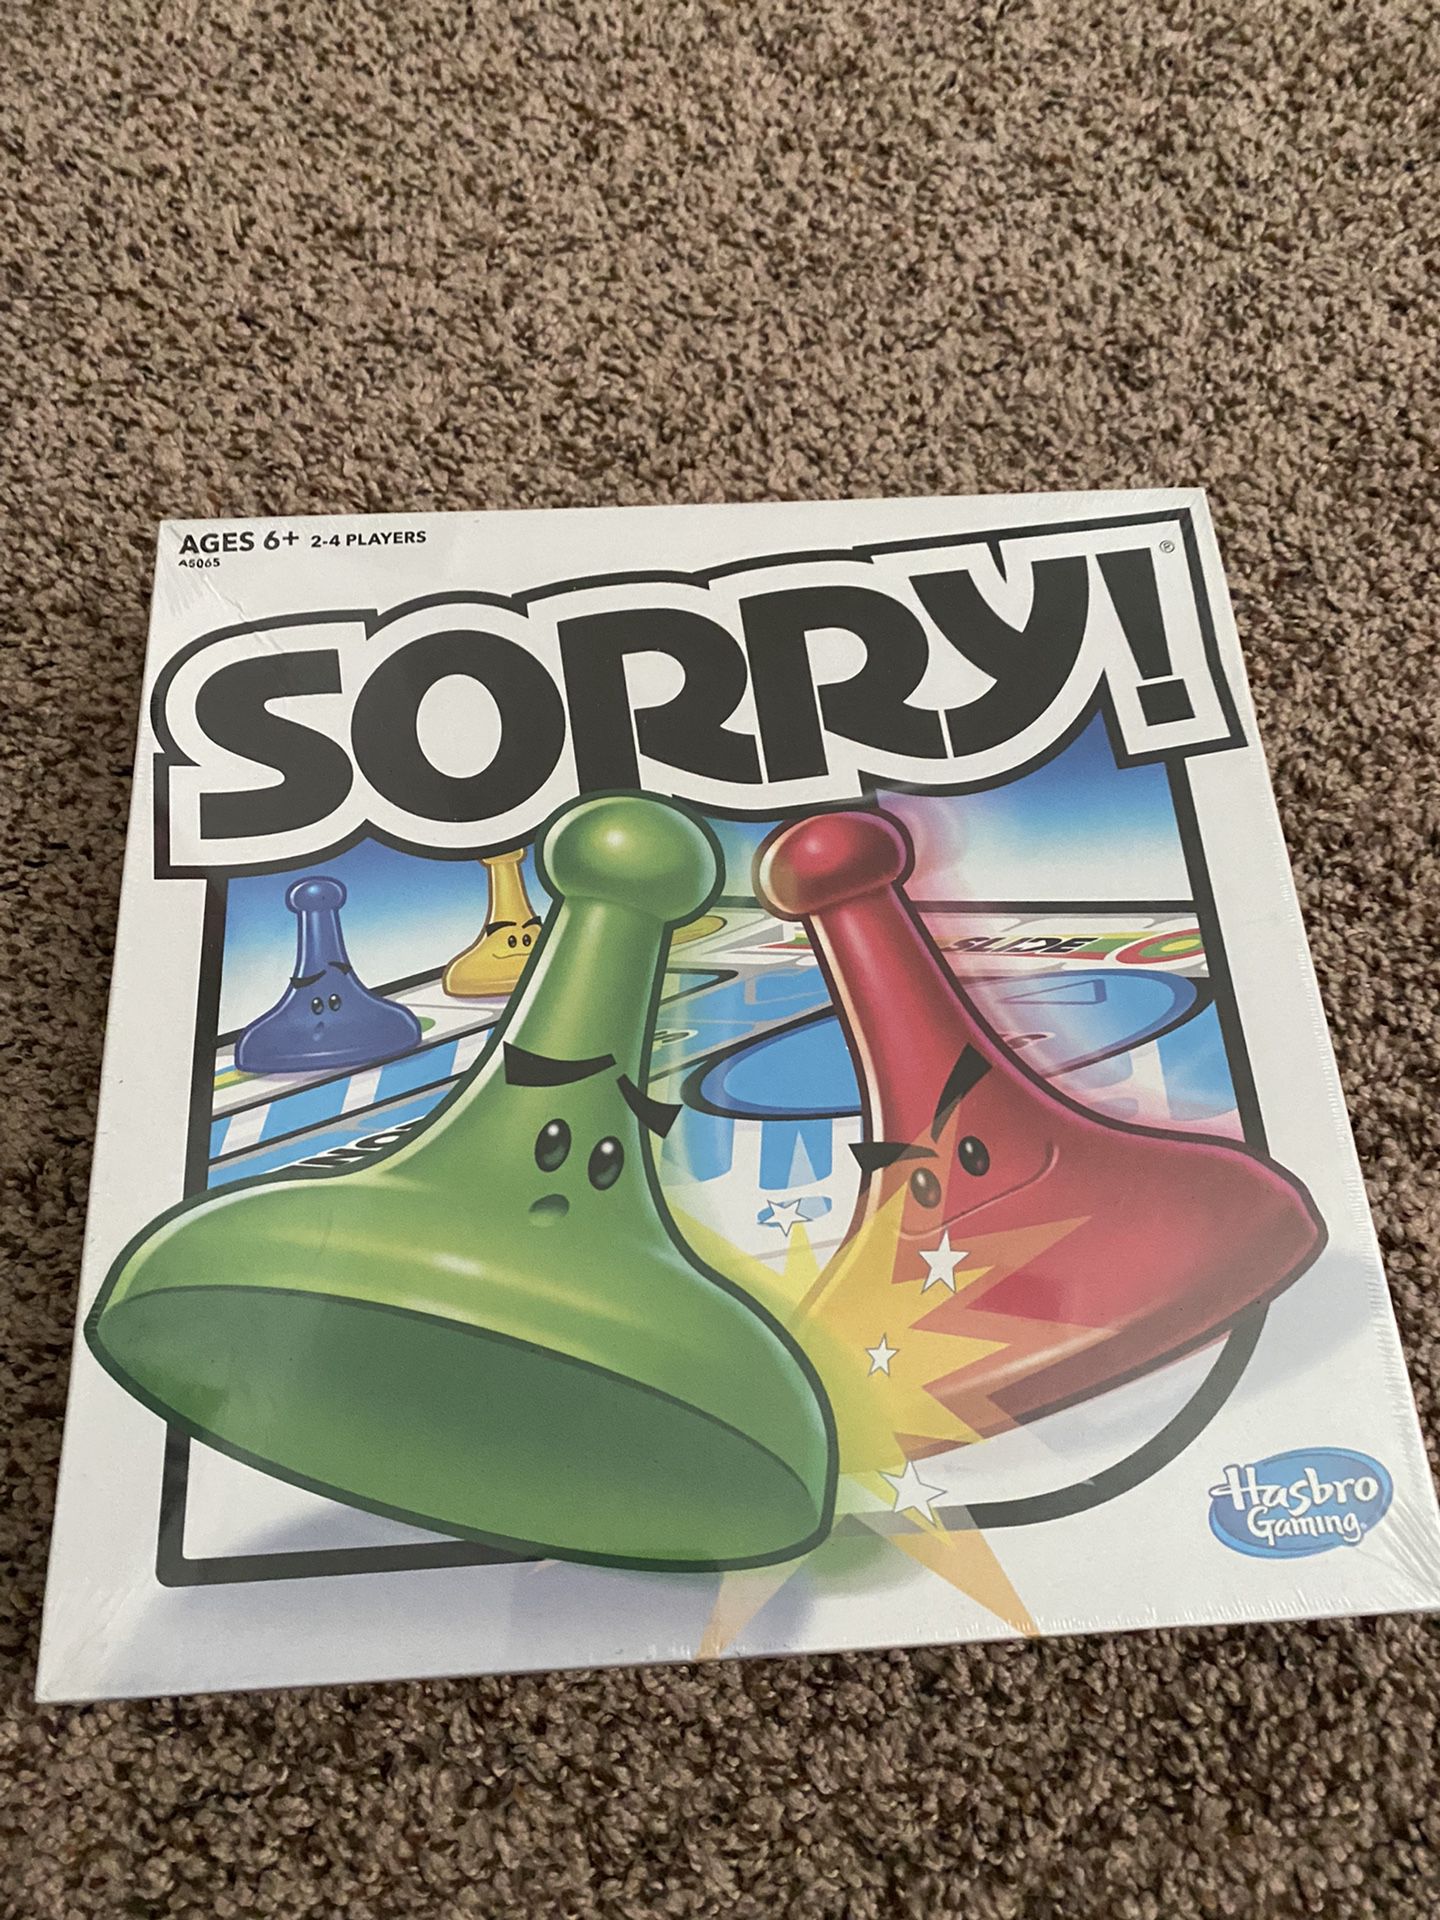 Sorry Board Game 